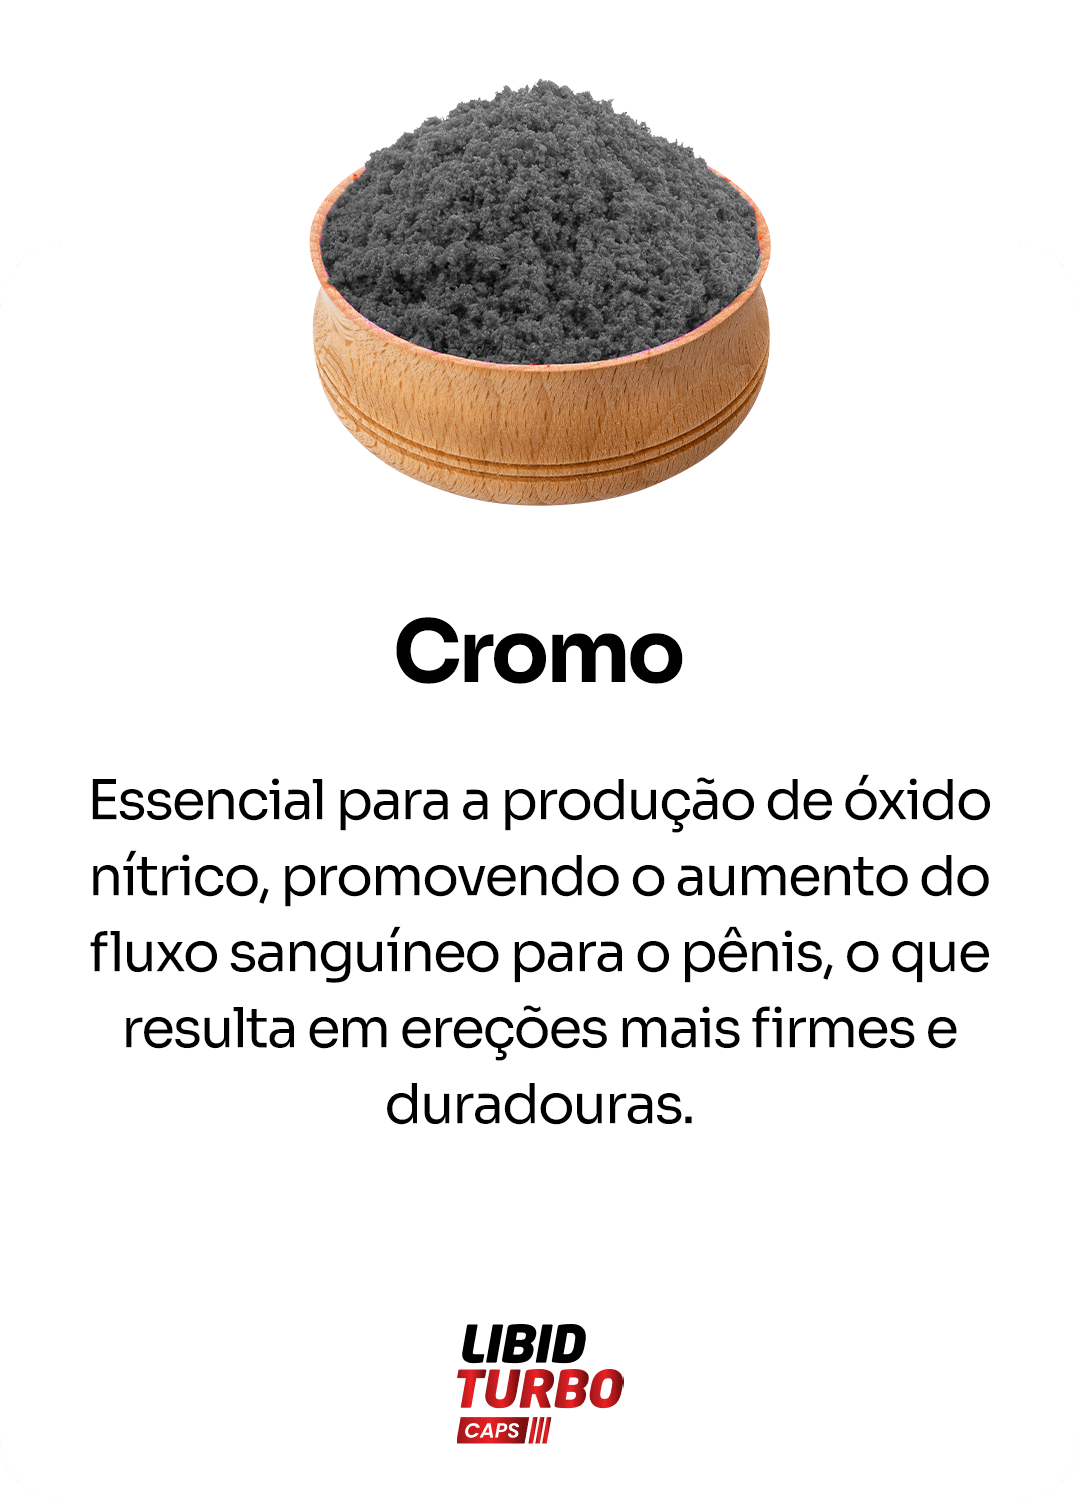 Cromo (5)